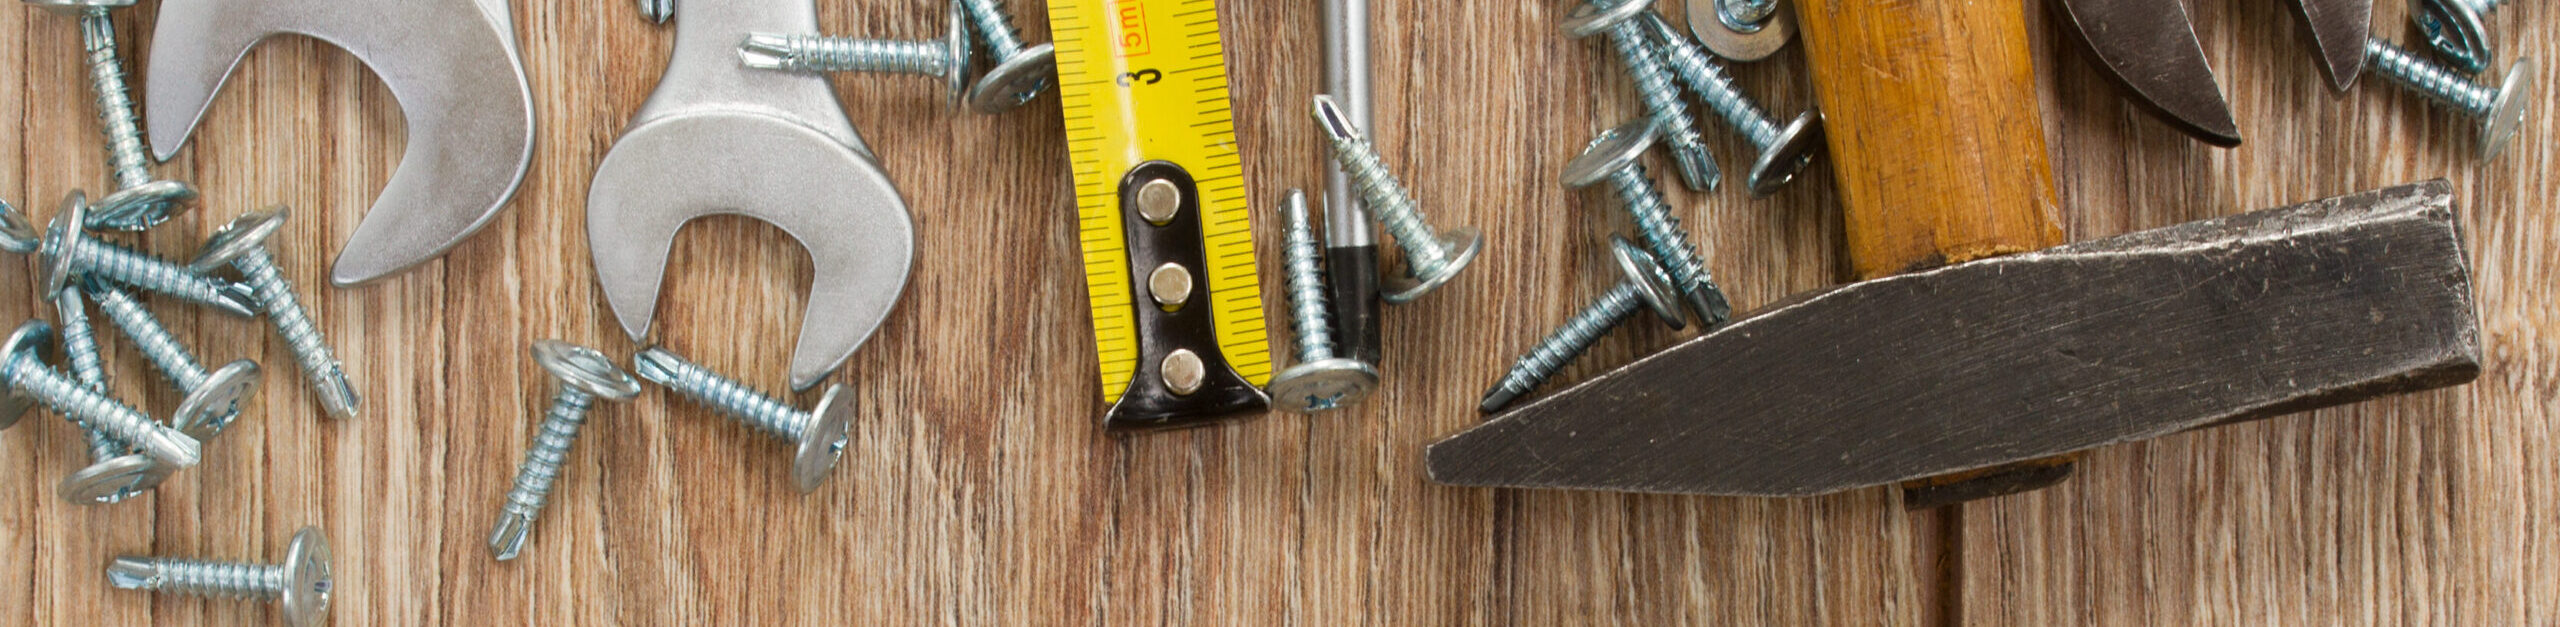 tools kit border on wooden  parquet planks